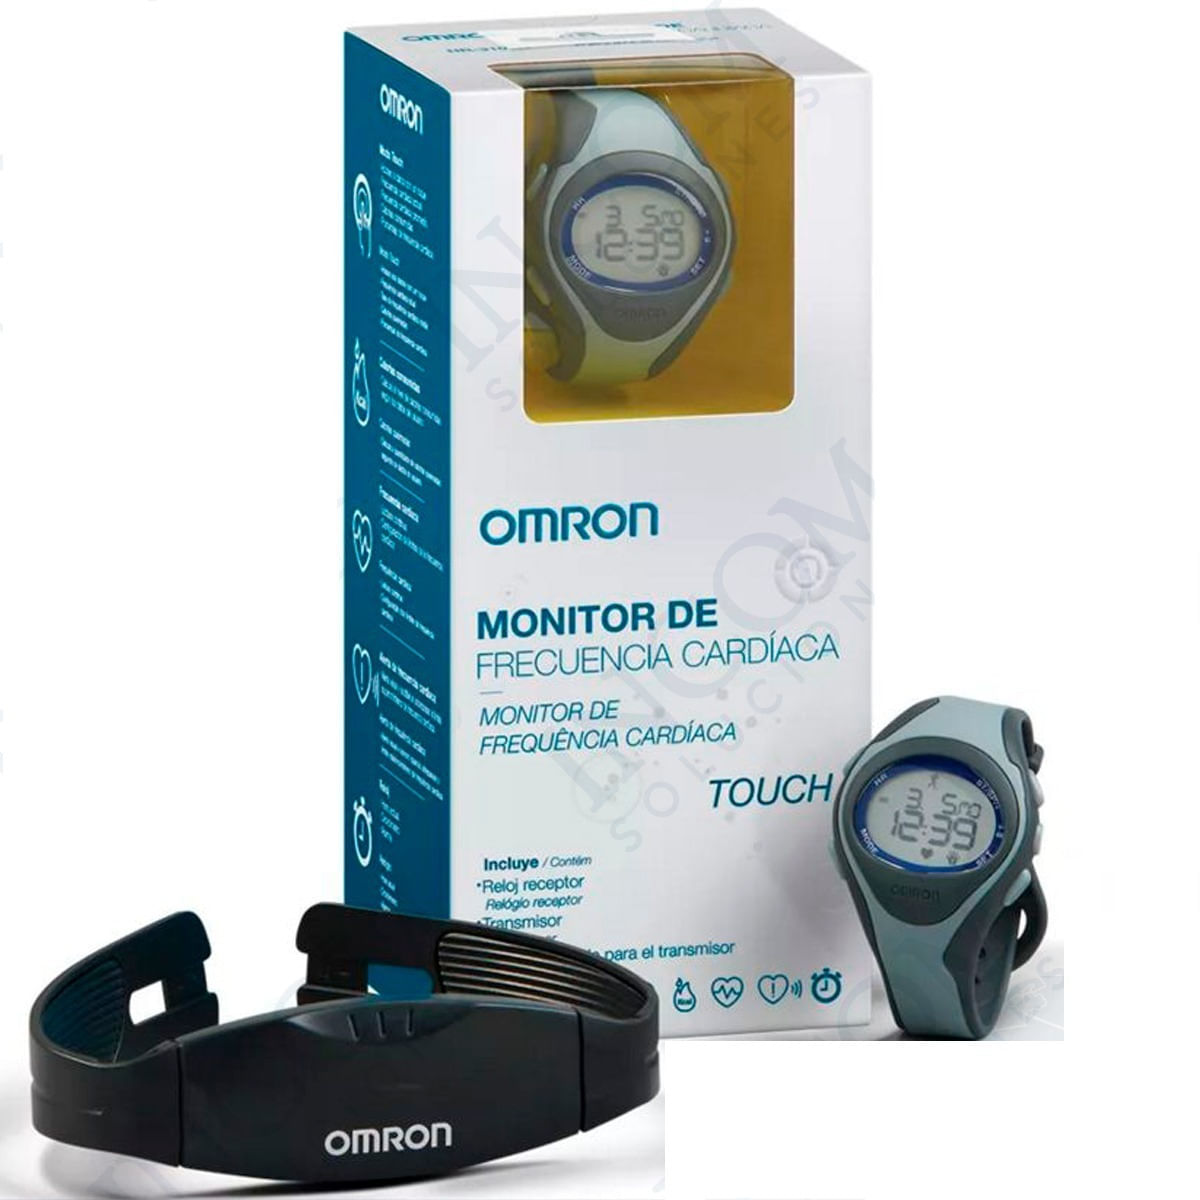 Monitor Omron de Frecuencia Cardíaca Modelo Touch HR-310LA